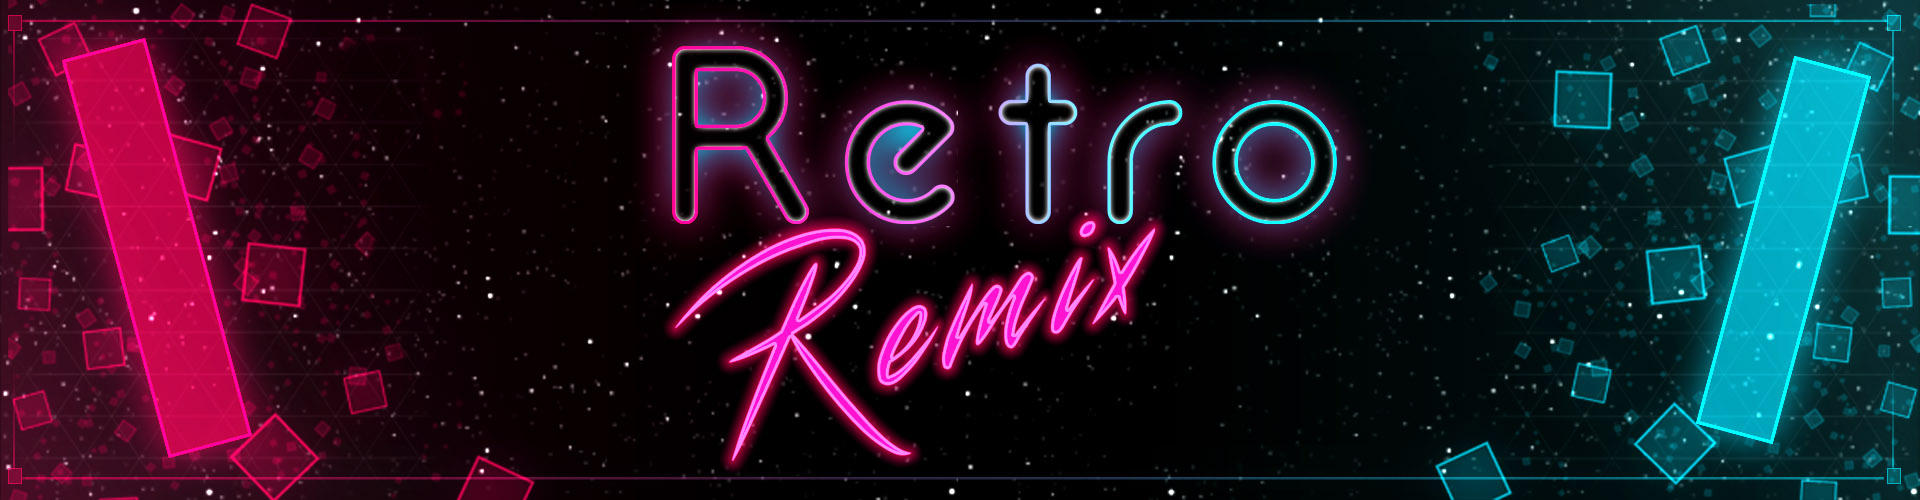 Retro Remix: Pong Edition